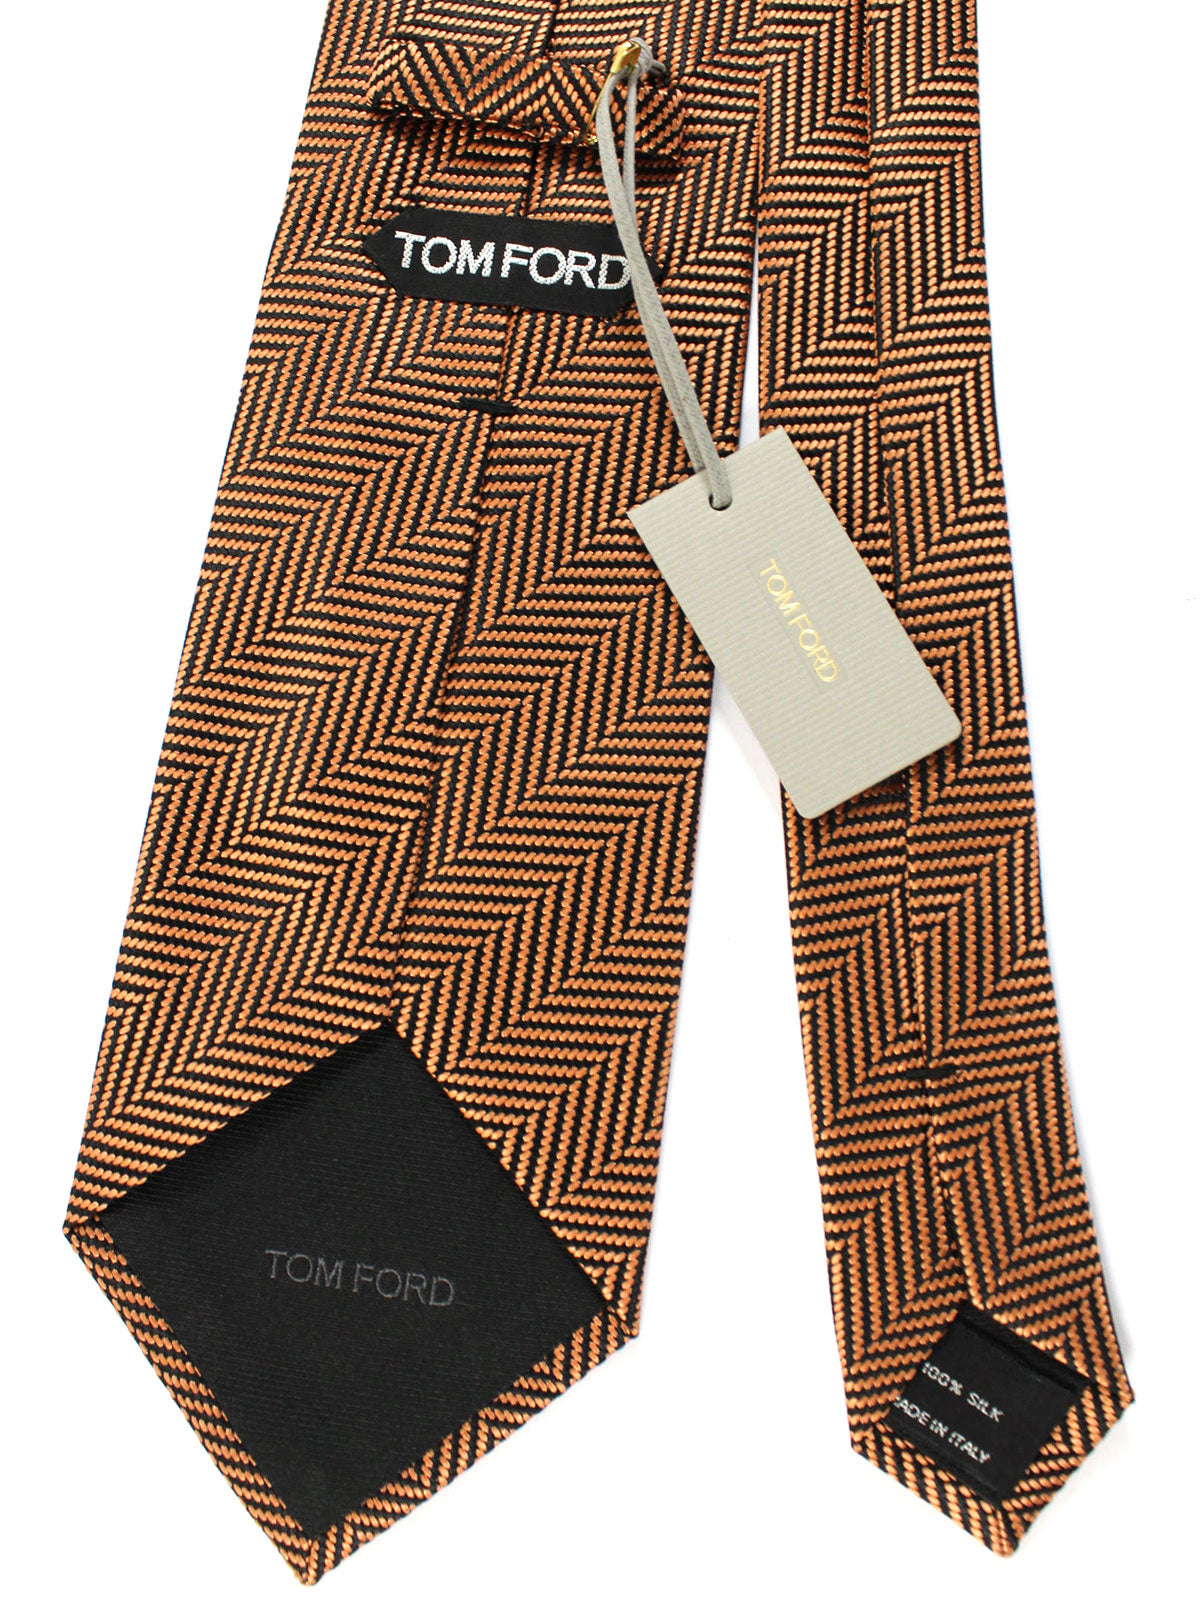 Tom Ford Silk Tie Black Copper Herringbone - Wide Necktie - Tie Deals